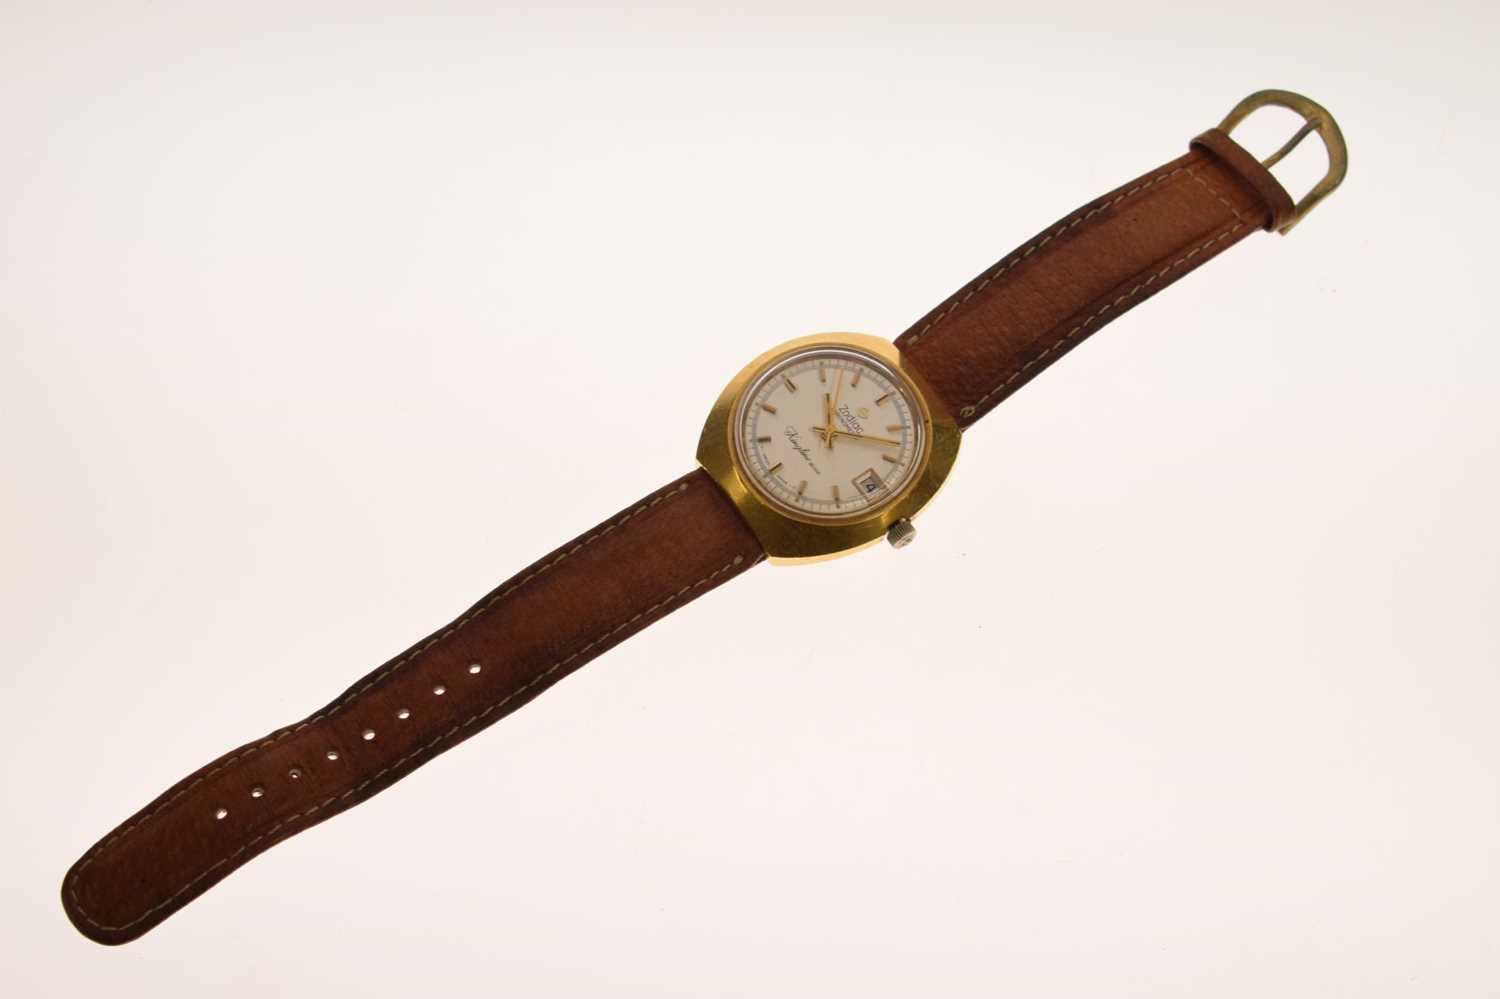 Zodiac - Gentleman's 'Kingline' Chronometer gold-plated cased wristwatch - Image 2 of 6